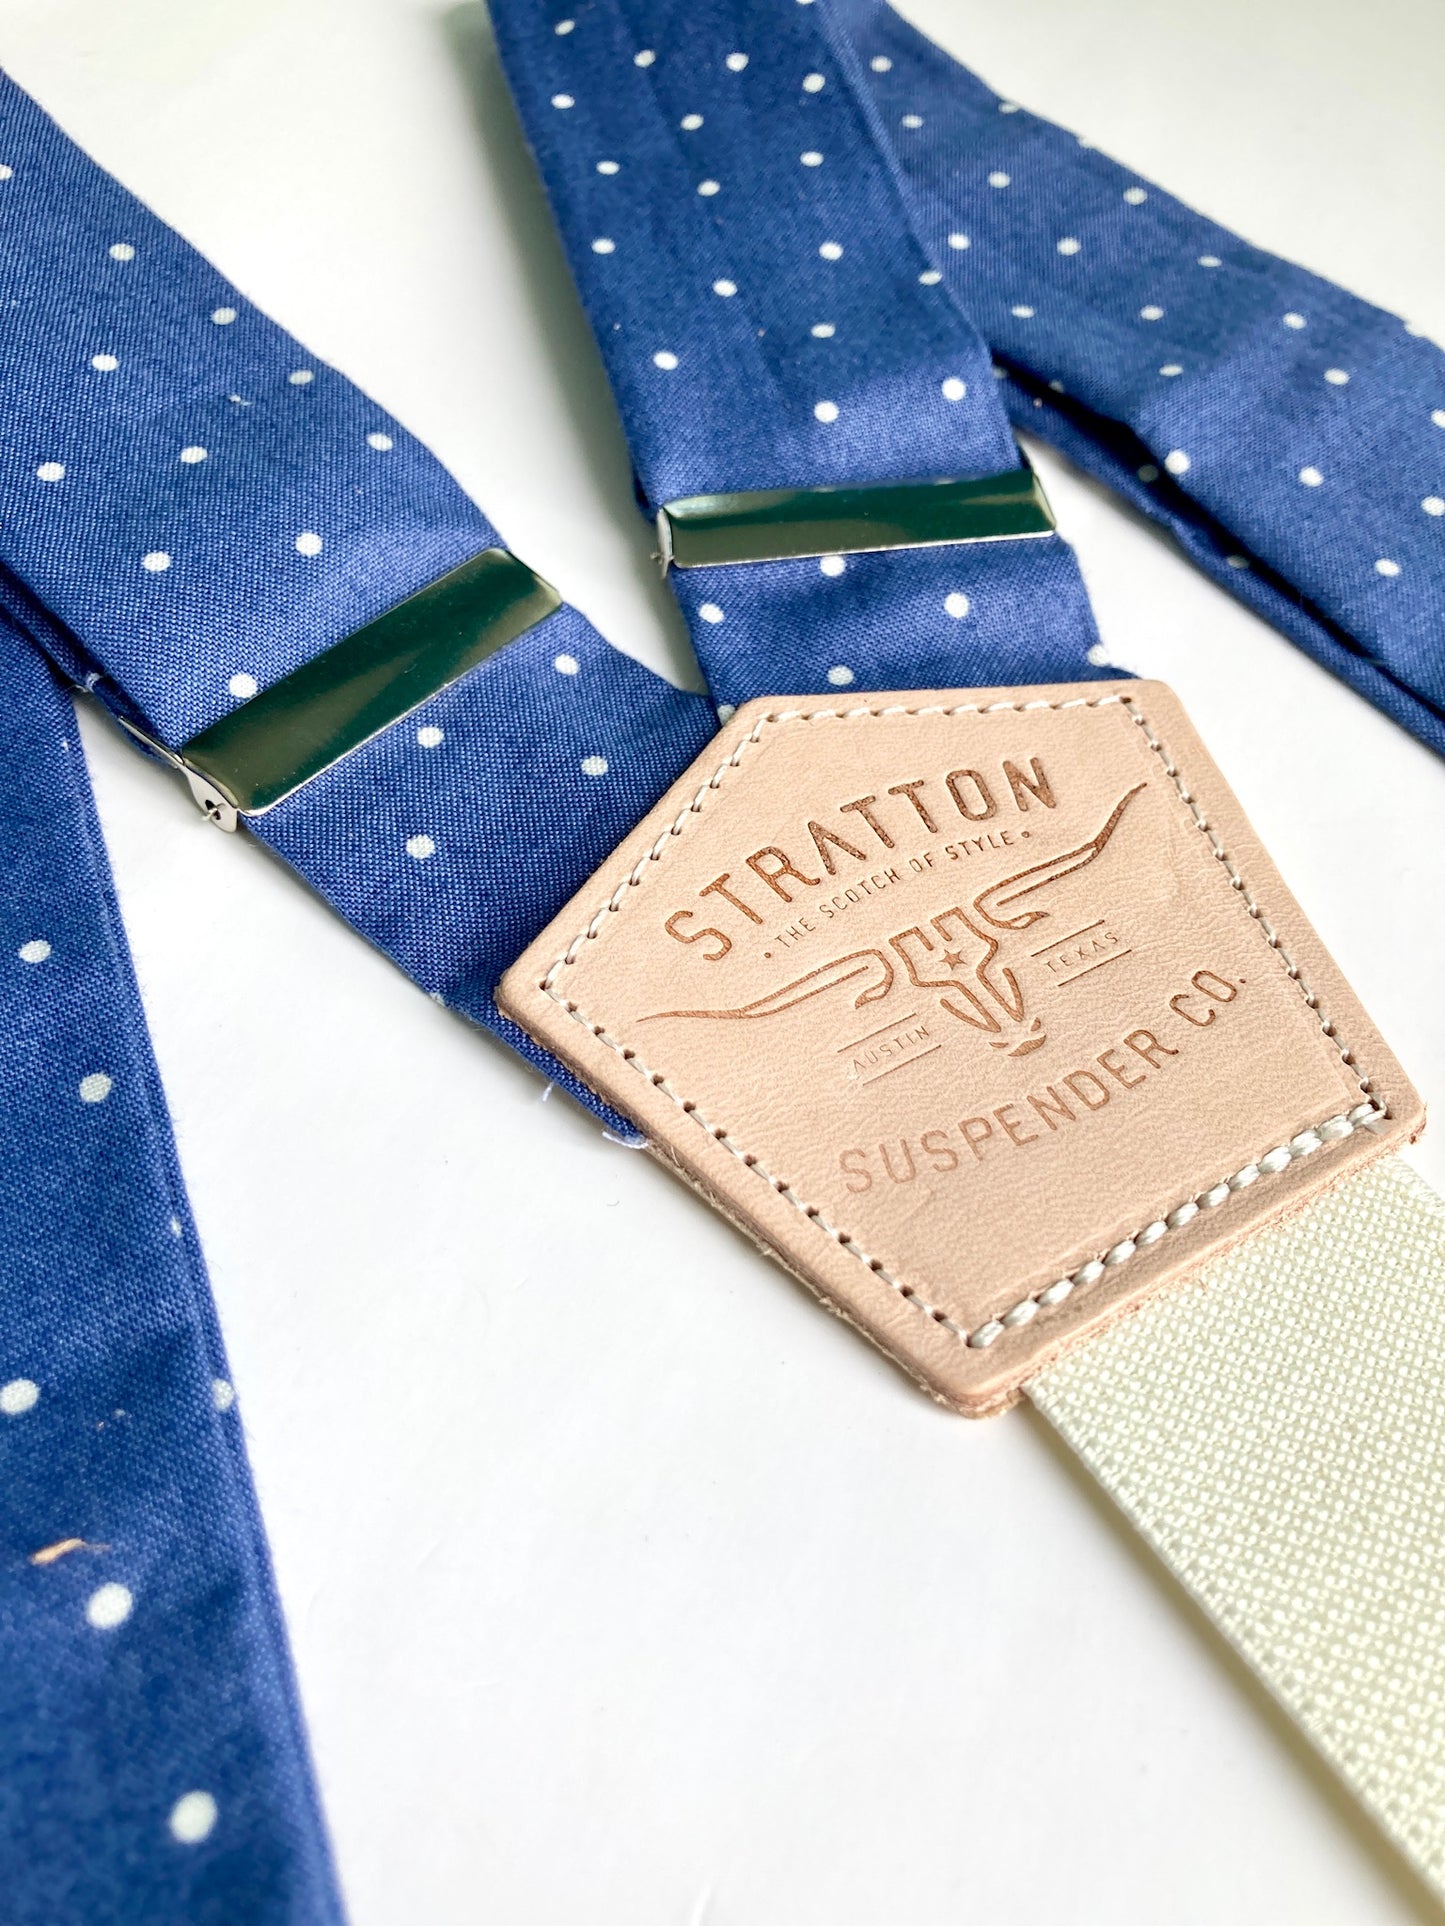 Stratton Suspenders in Vintage Polka Dot Blue 